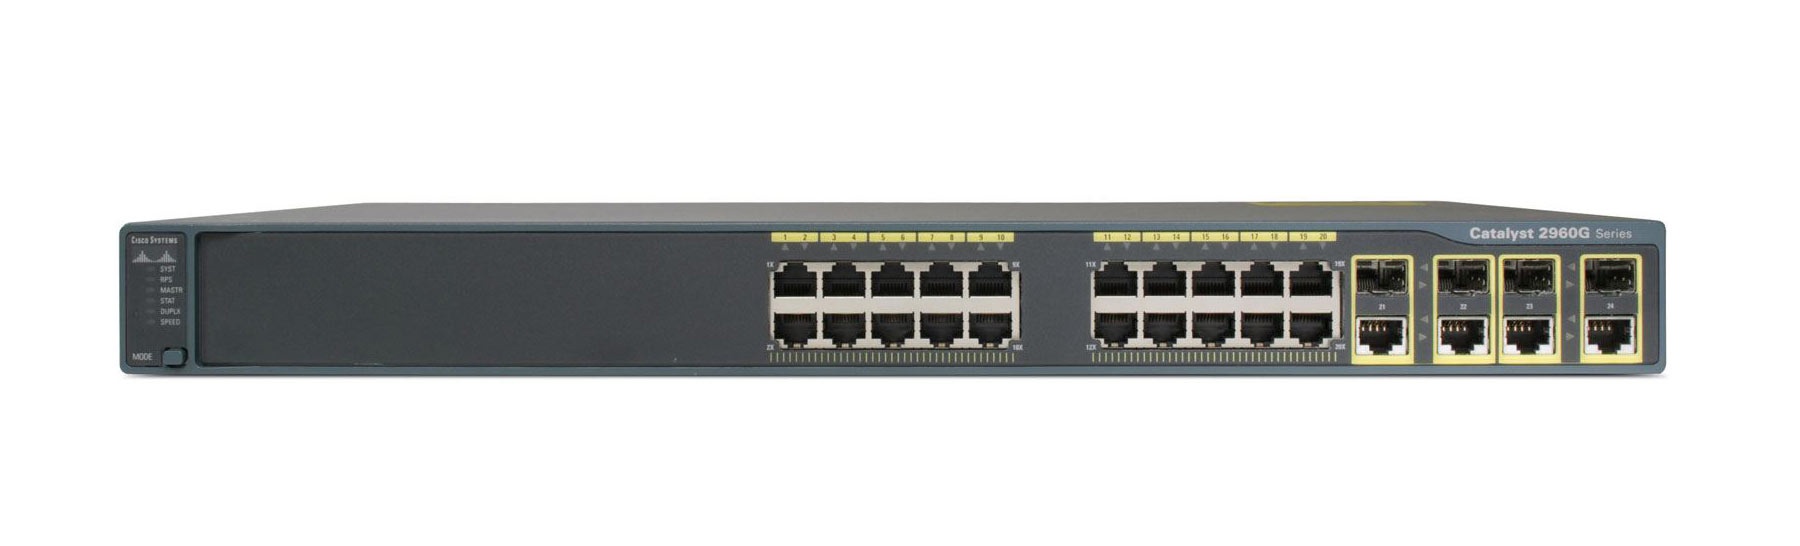 Ws C2960g 24tc L Cisco Network Switch